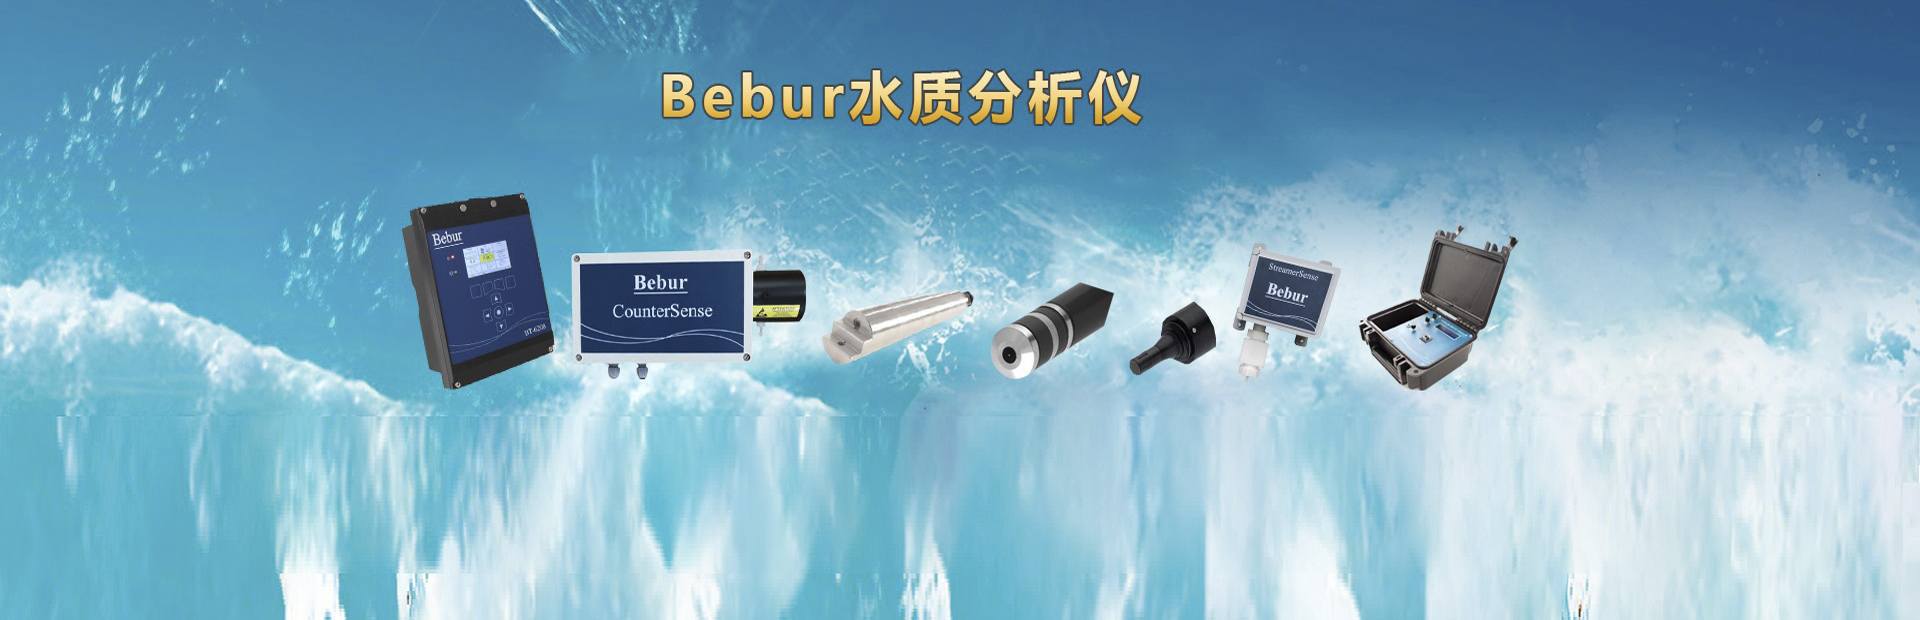 Bebur(巴倍尔)氧化还原电位计系列产品